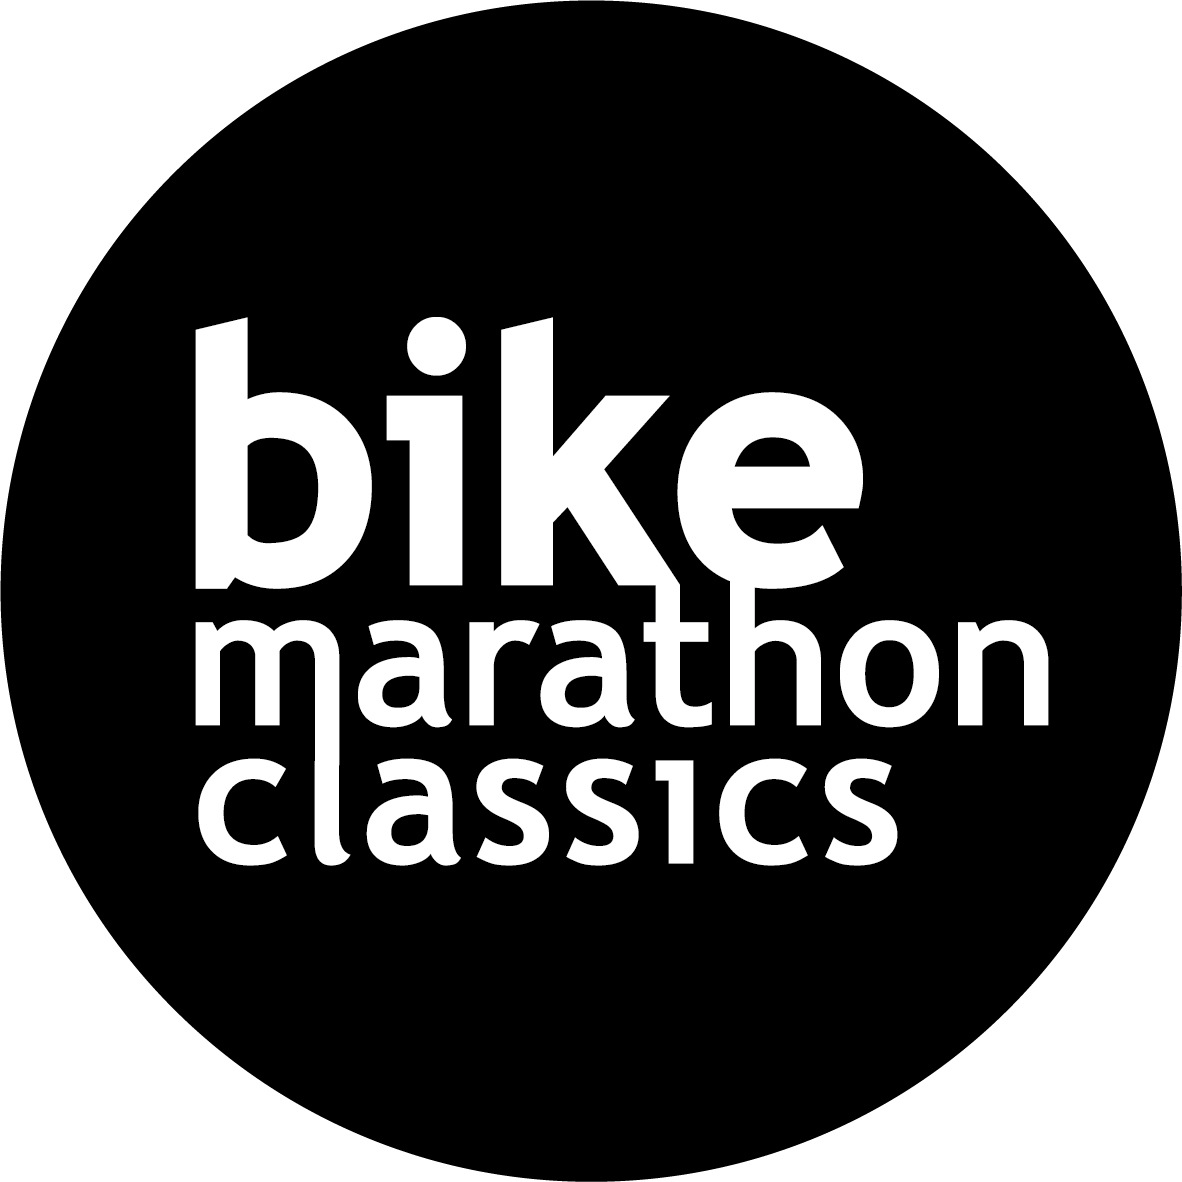 Bike Marathon Classics logo